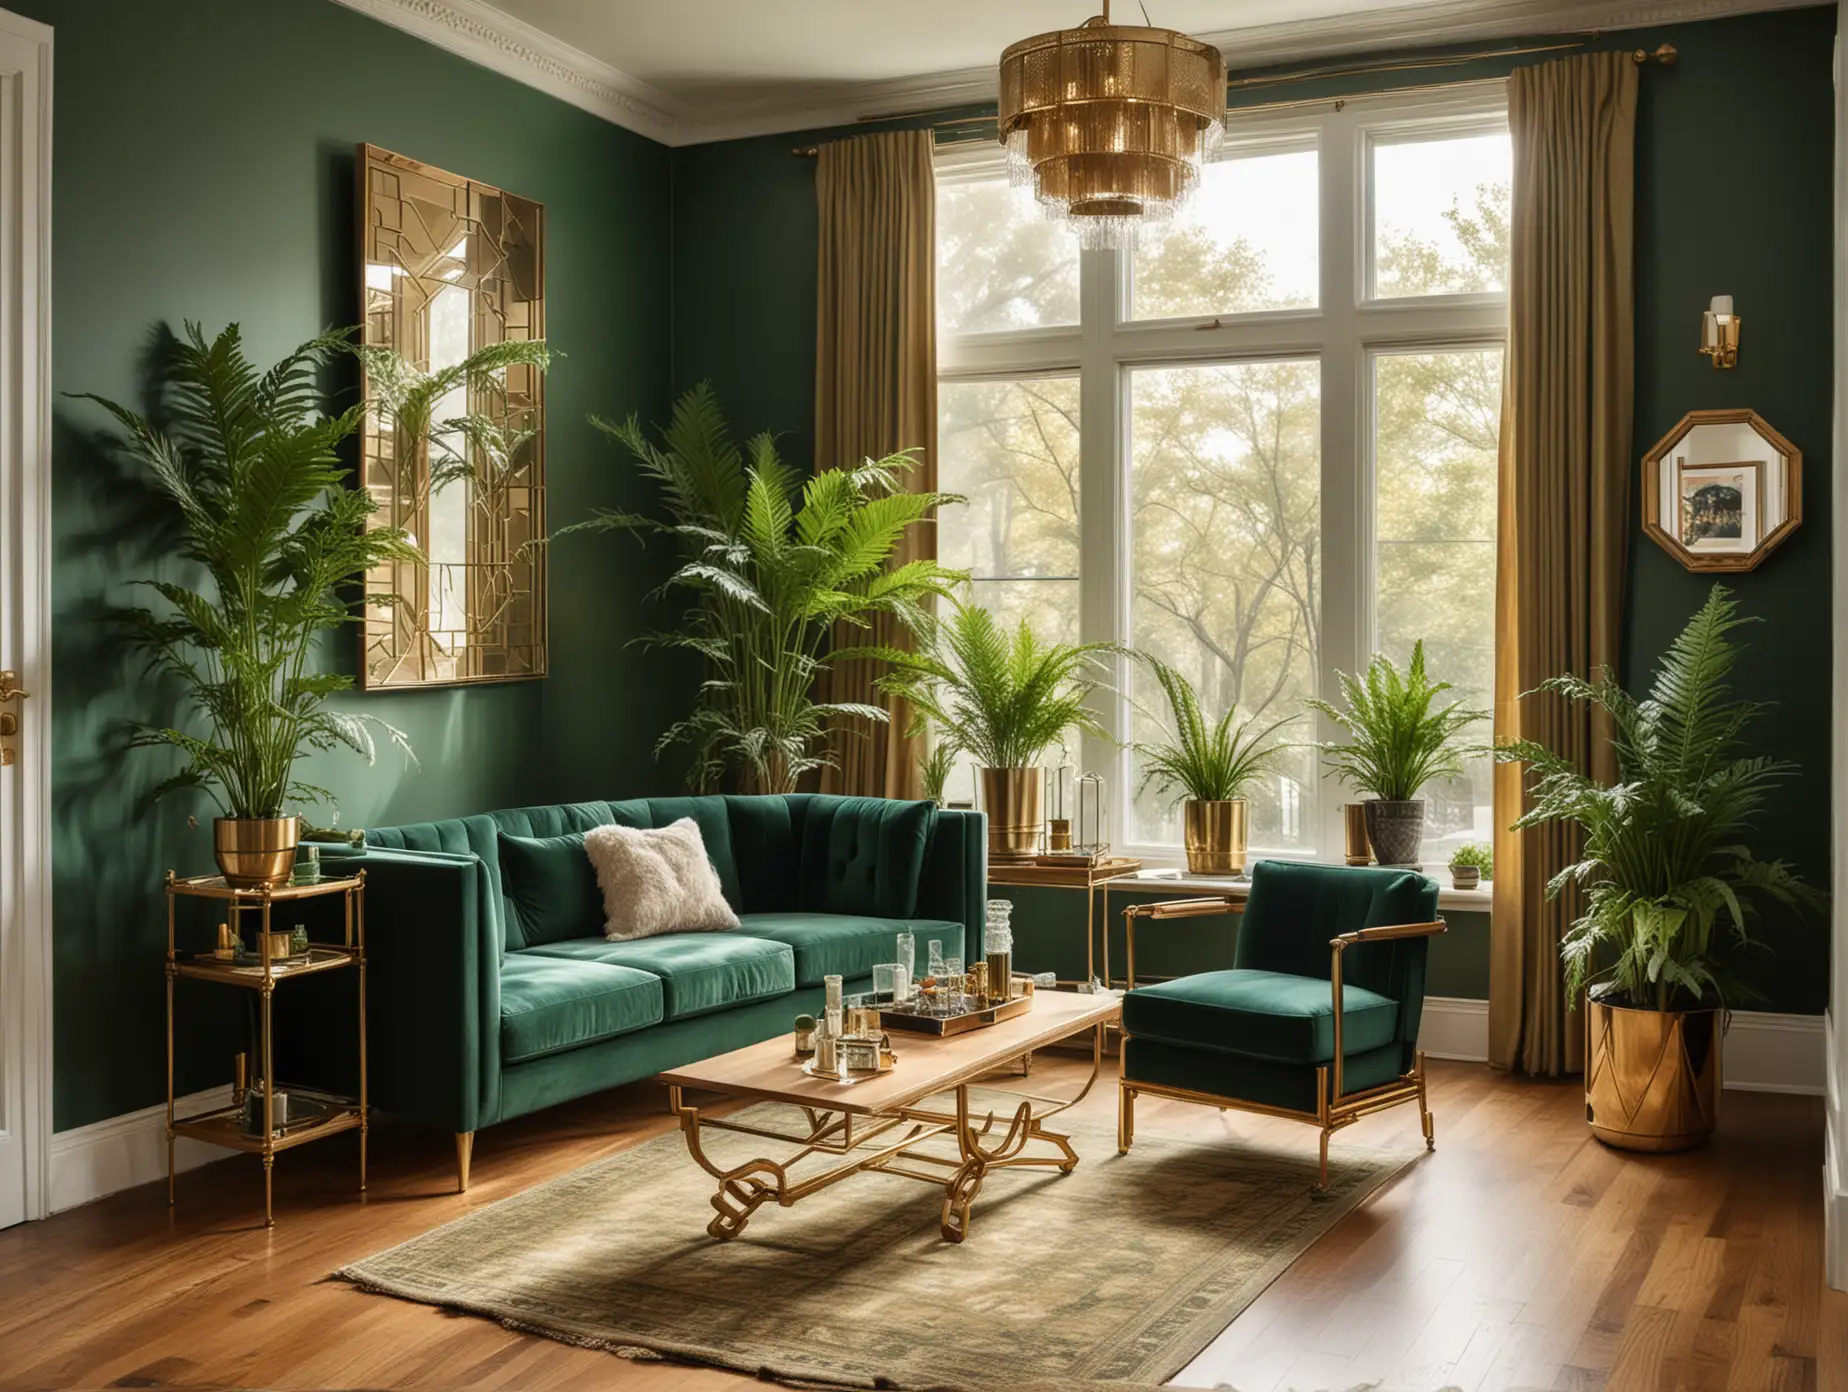 Elegant-Art-Deco-Living-Room-with-Emerald-Green-Walls-and-Golden-Accents